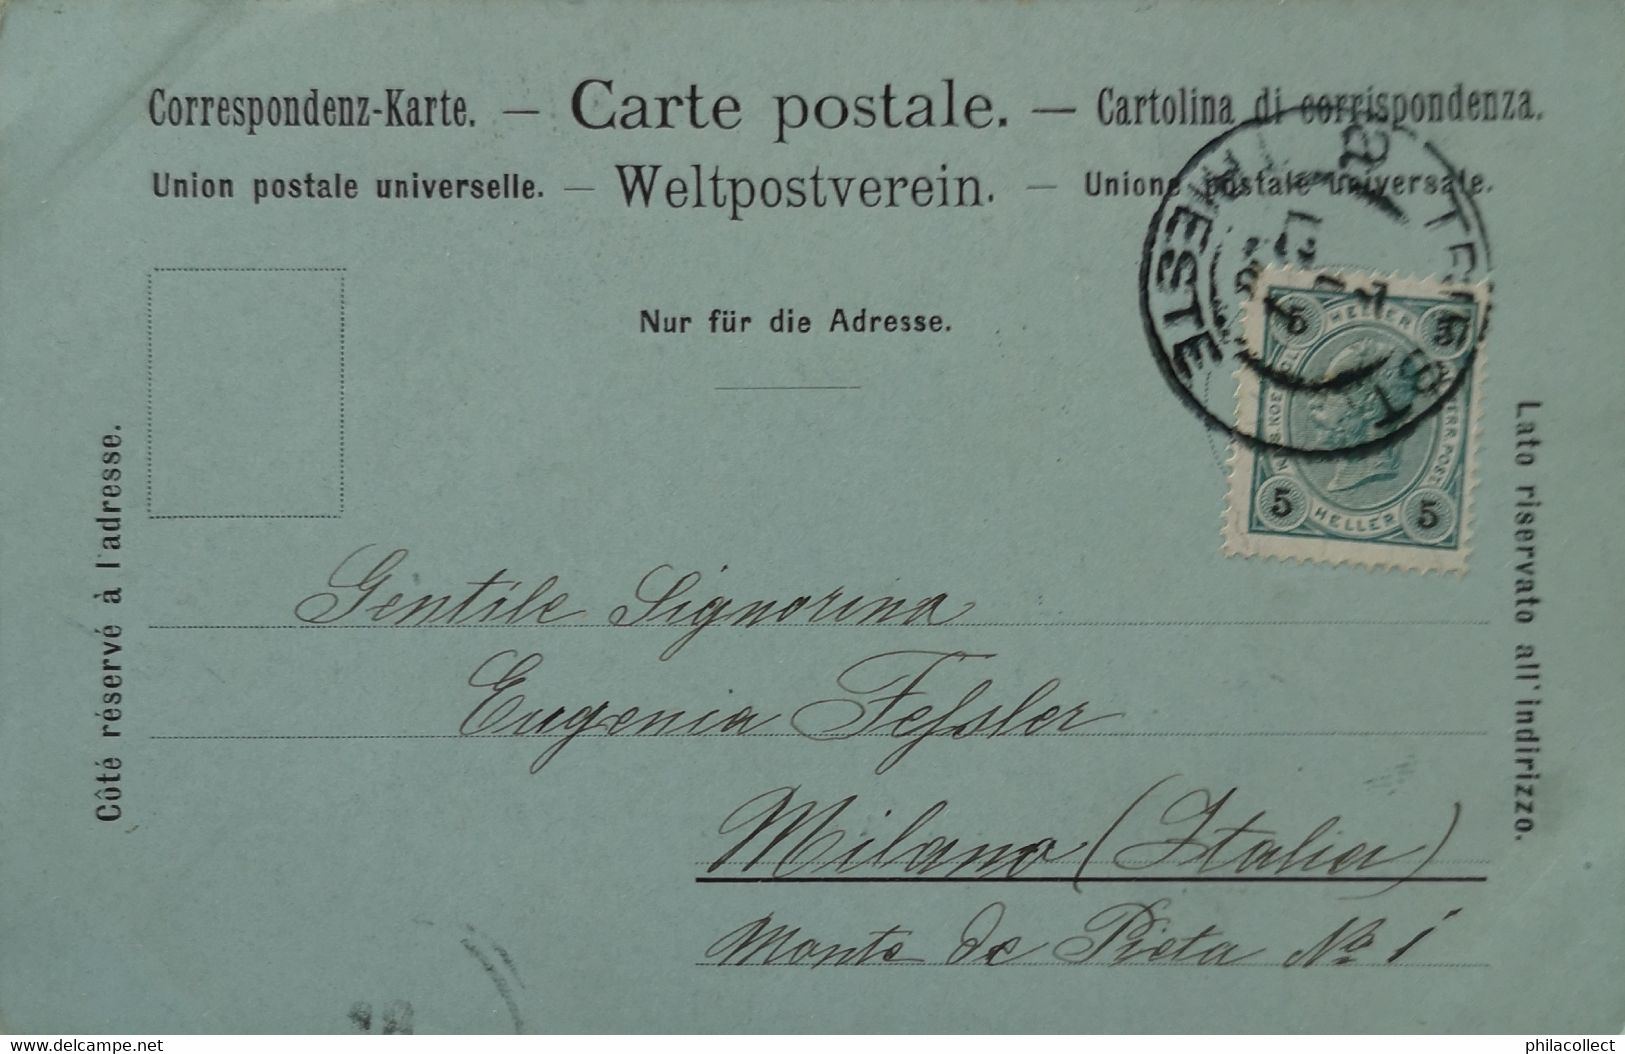 Trieste // Un Saluto Da  - Piazza Grande 190? With Austria Stamp - Trieste